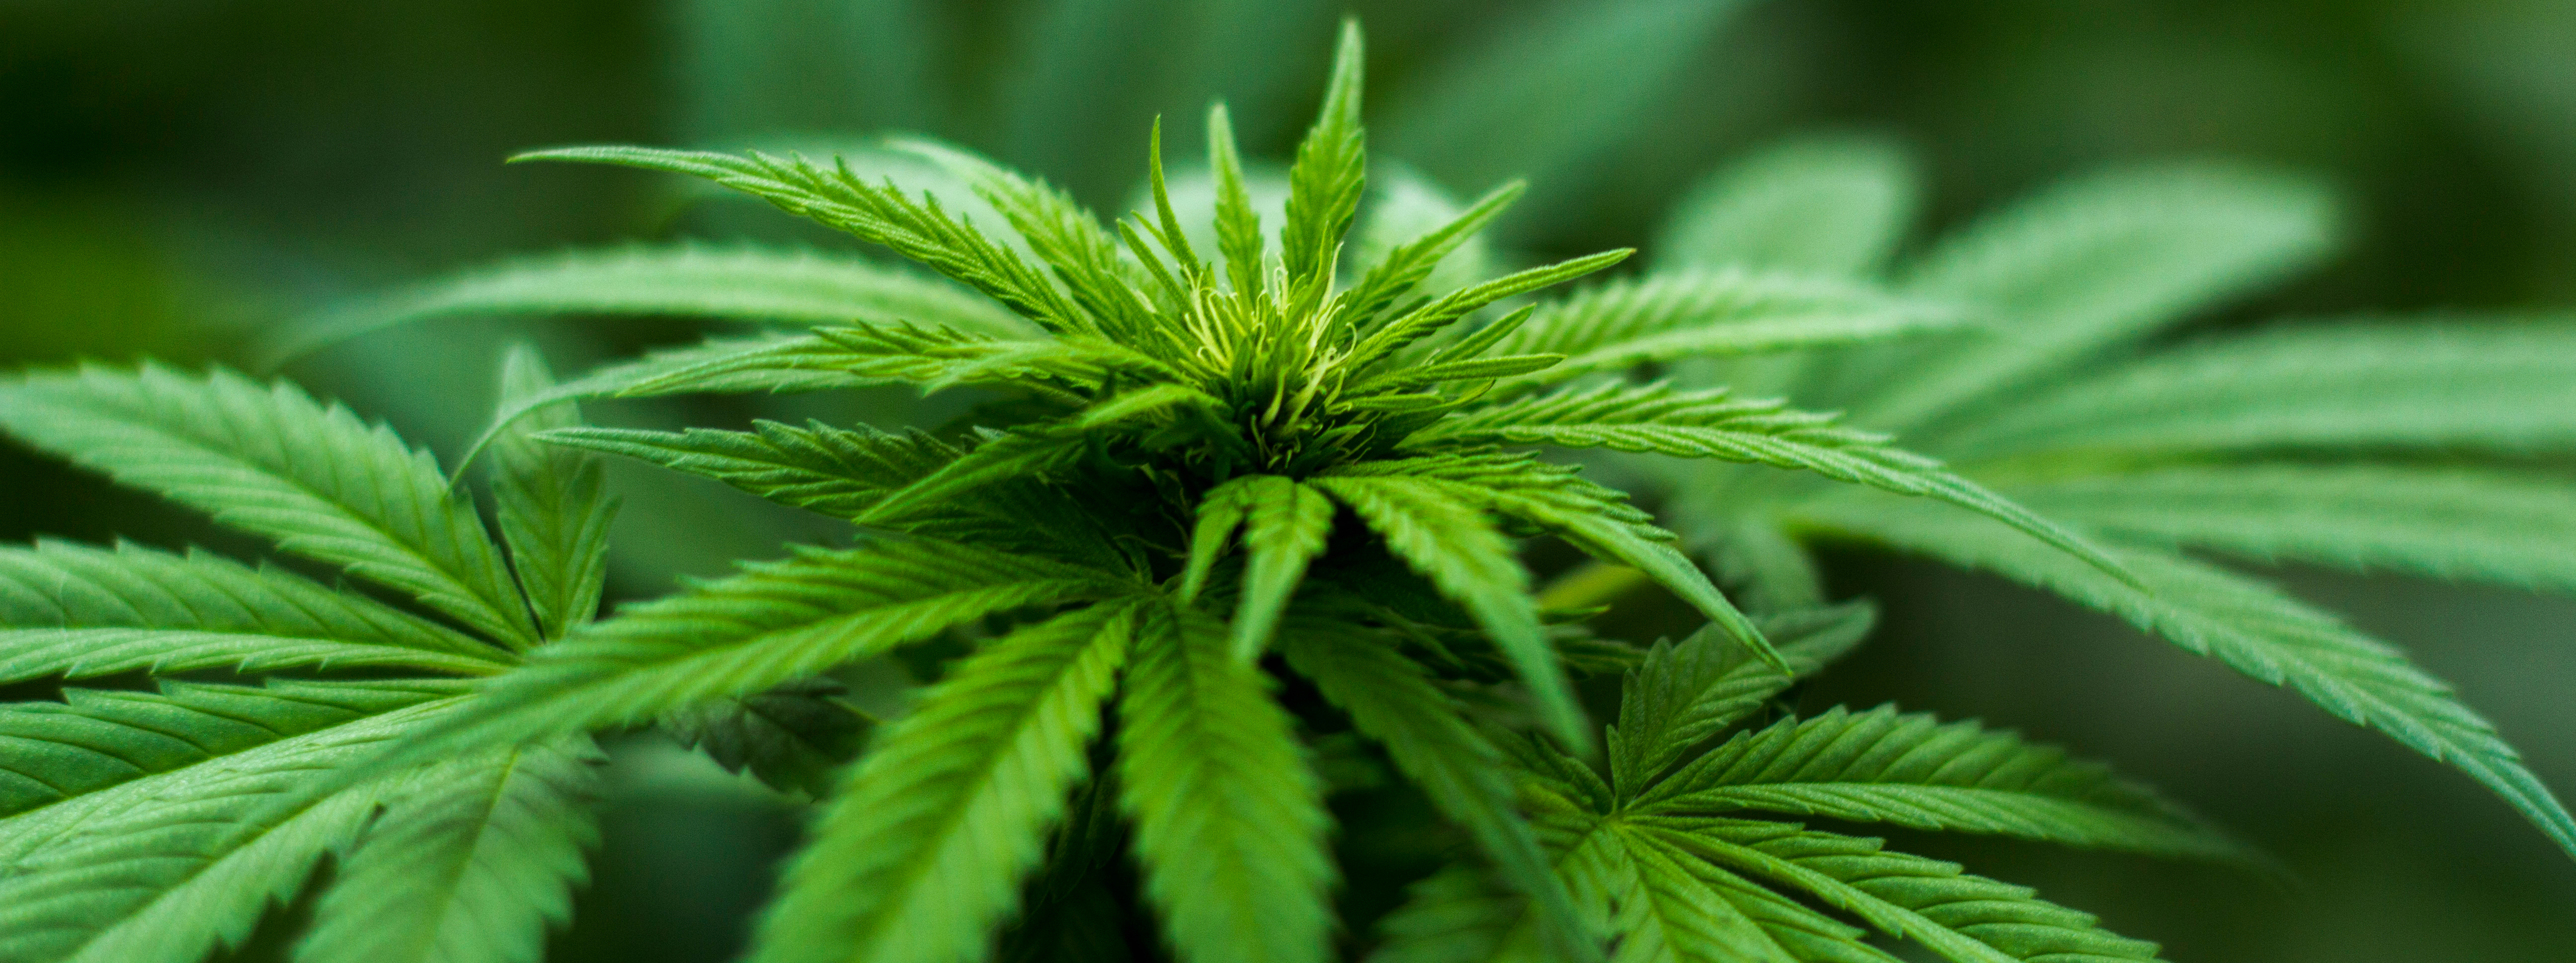 Missouri Marijuana Law Update